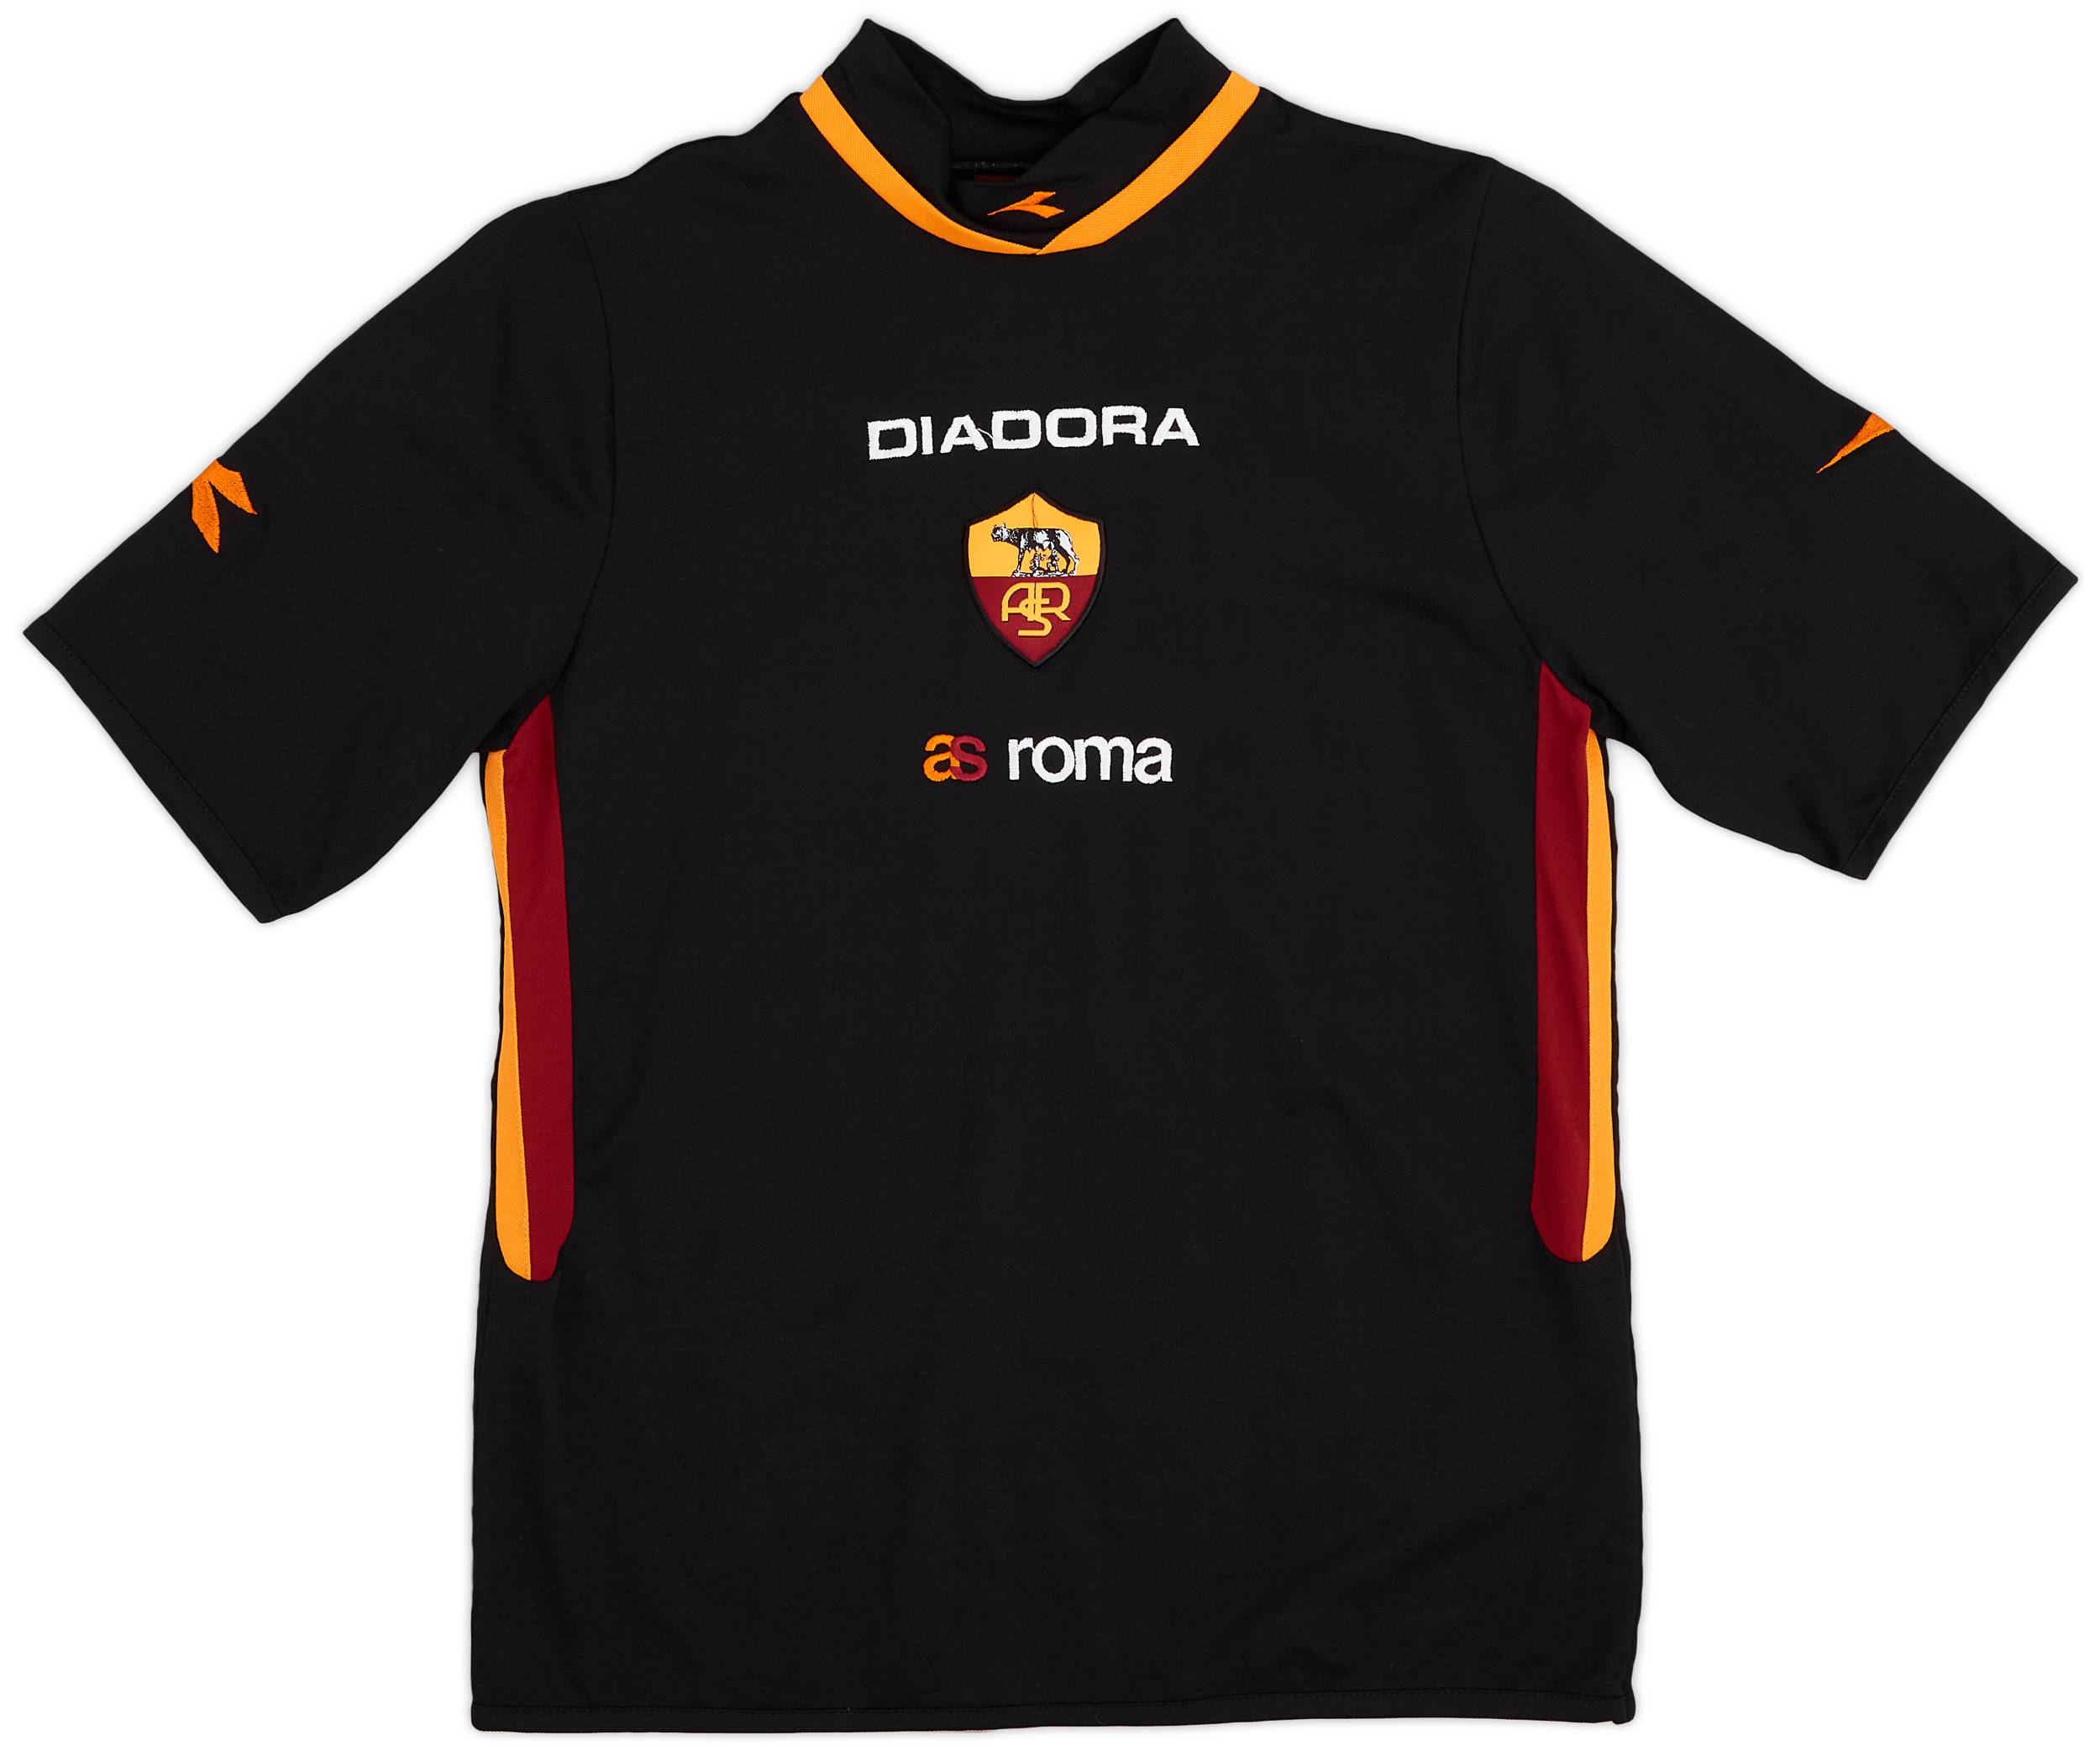 2003-04 Roma Diadora Training Shirt - 9/10 - (S)